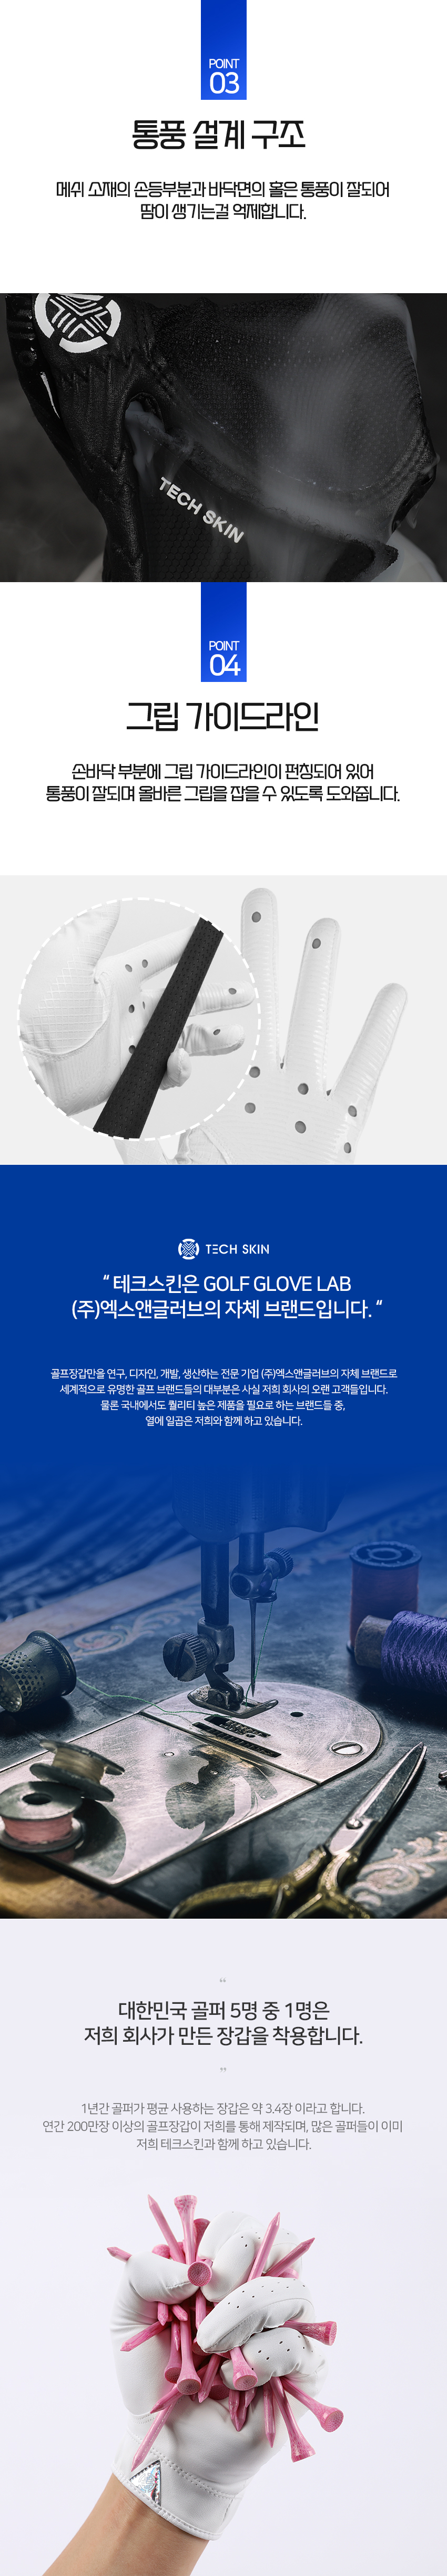 techskin_silicone_golf_glove_w_detail_04.jpg